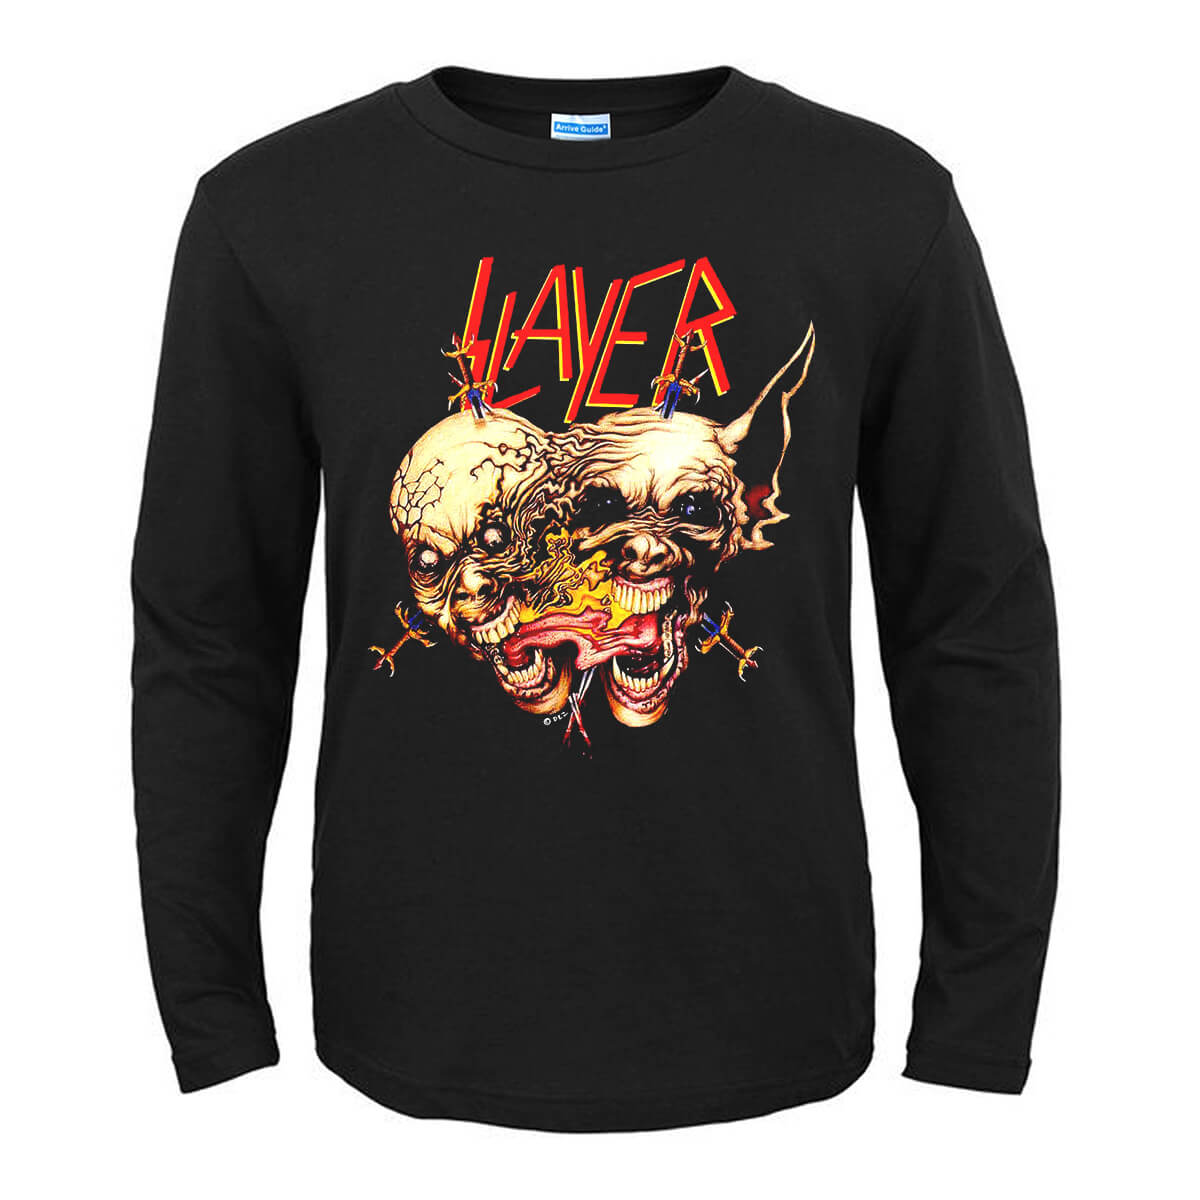 Us Slayer T-Shirt Metal Band Graphic Tees | WISHINY